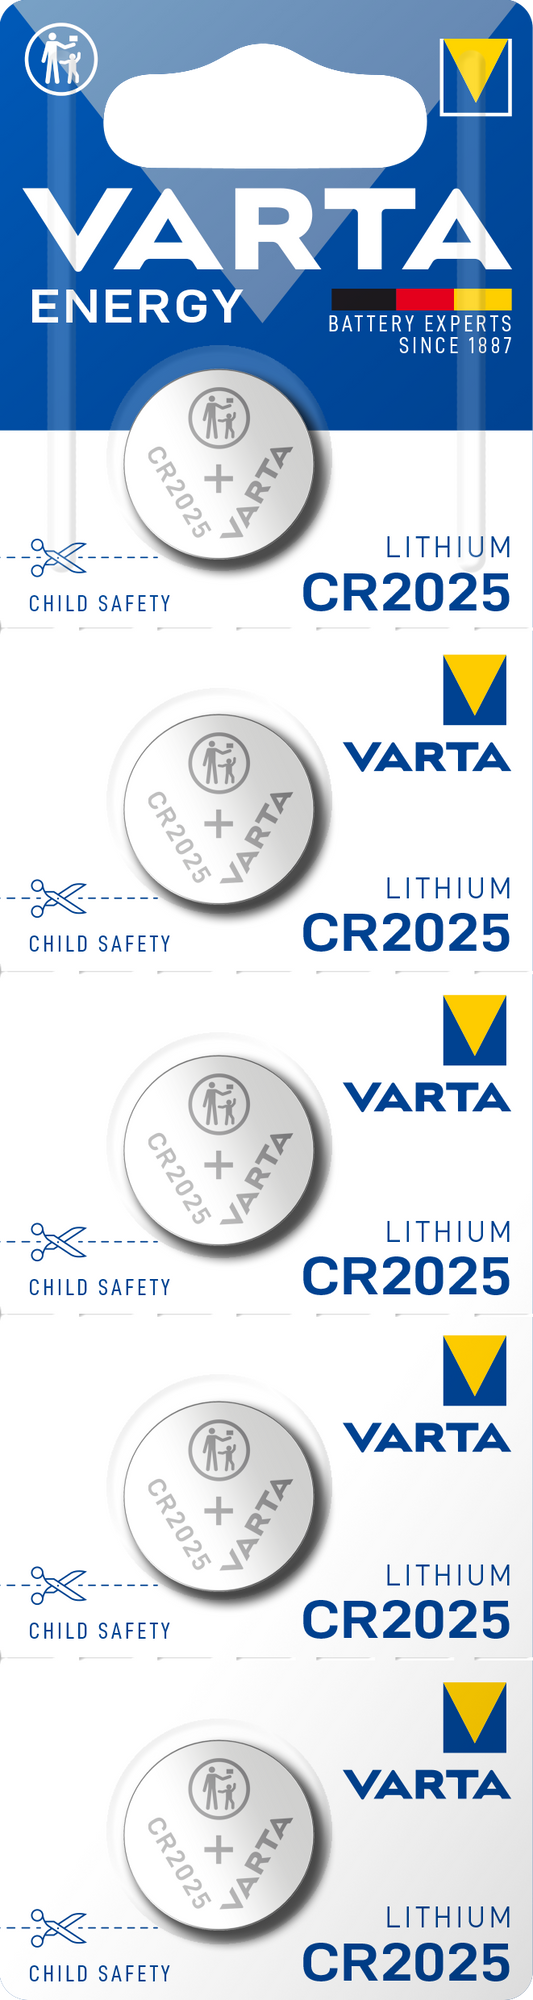 VARTA - Lithium - 2025 Pack of 5 Perforated